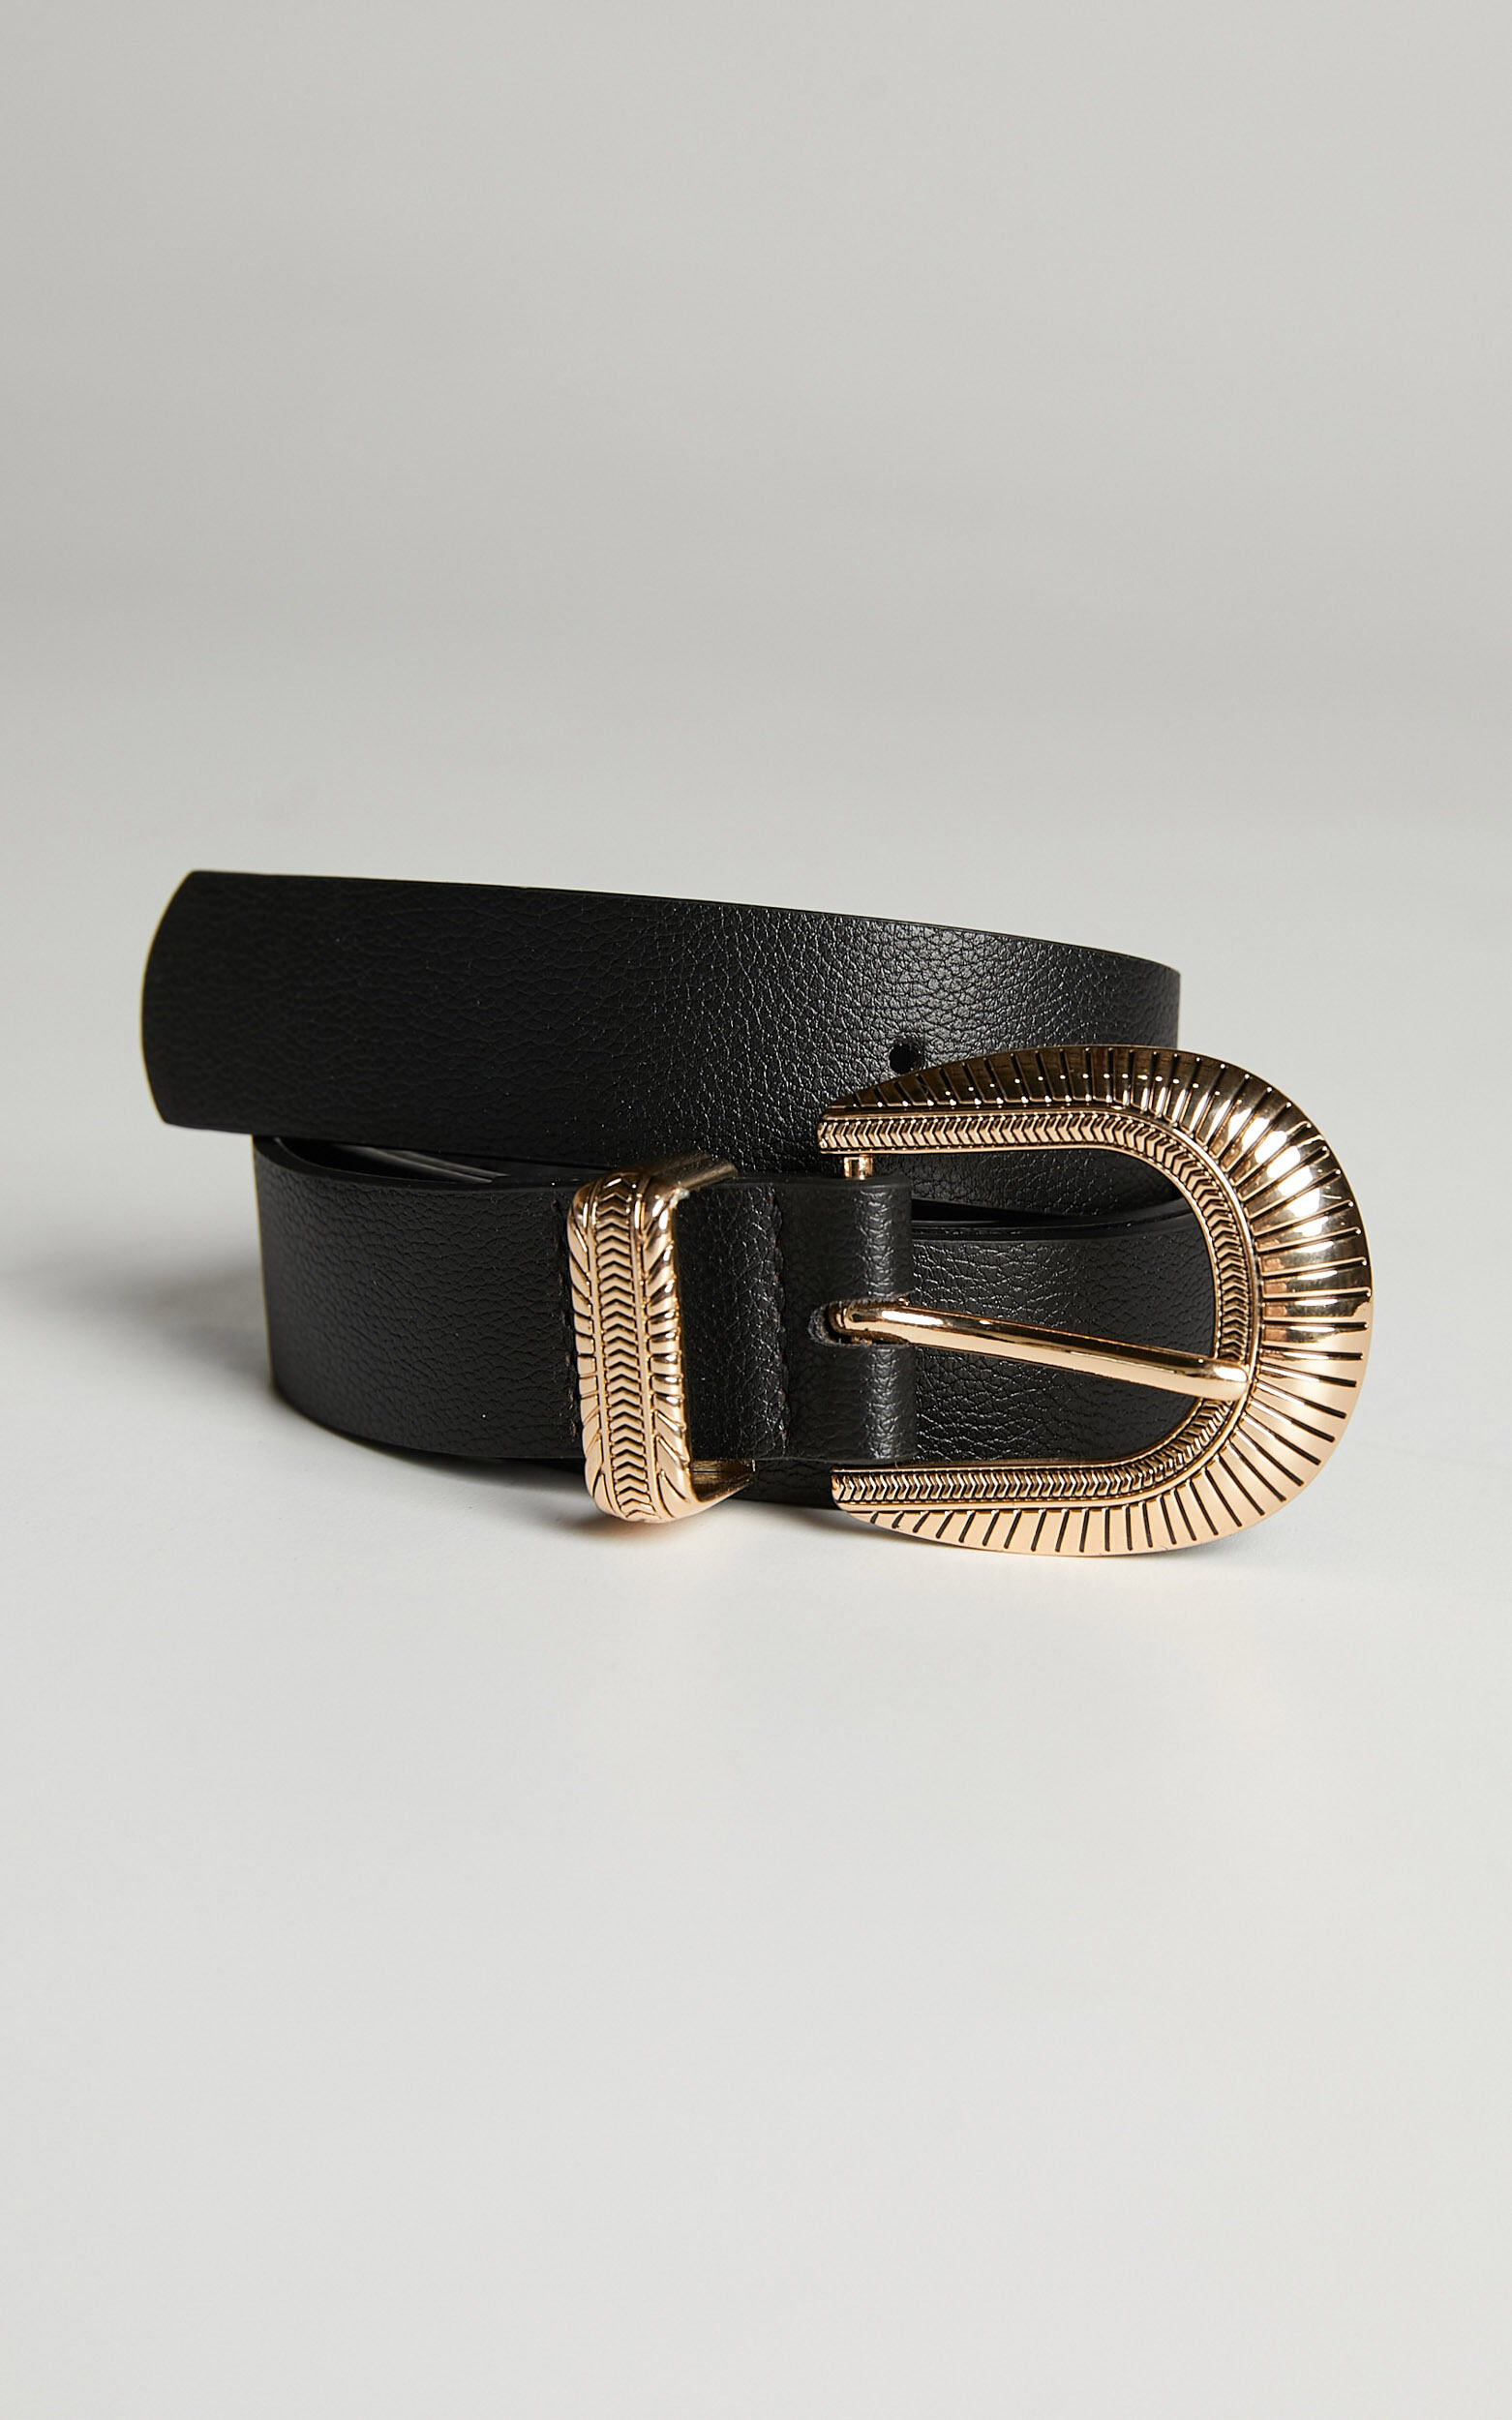 discount 94% WOMEN FASHION Accessories Belt Beige Black/Beige Single NoName Pacl belts 